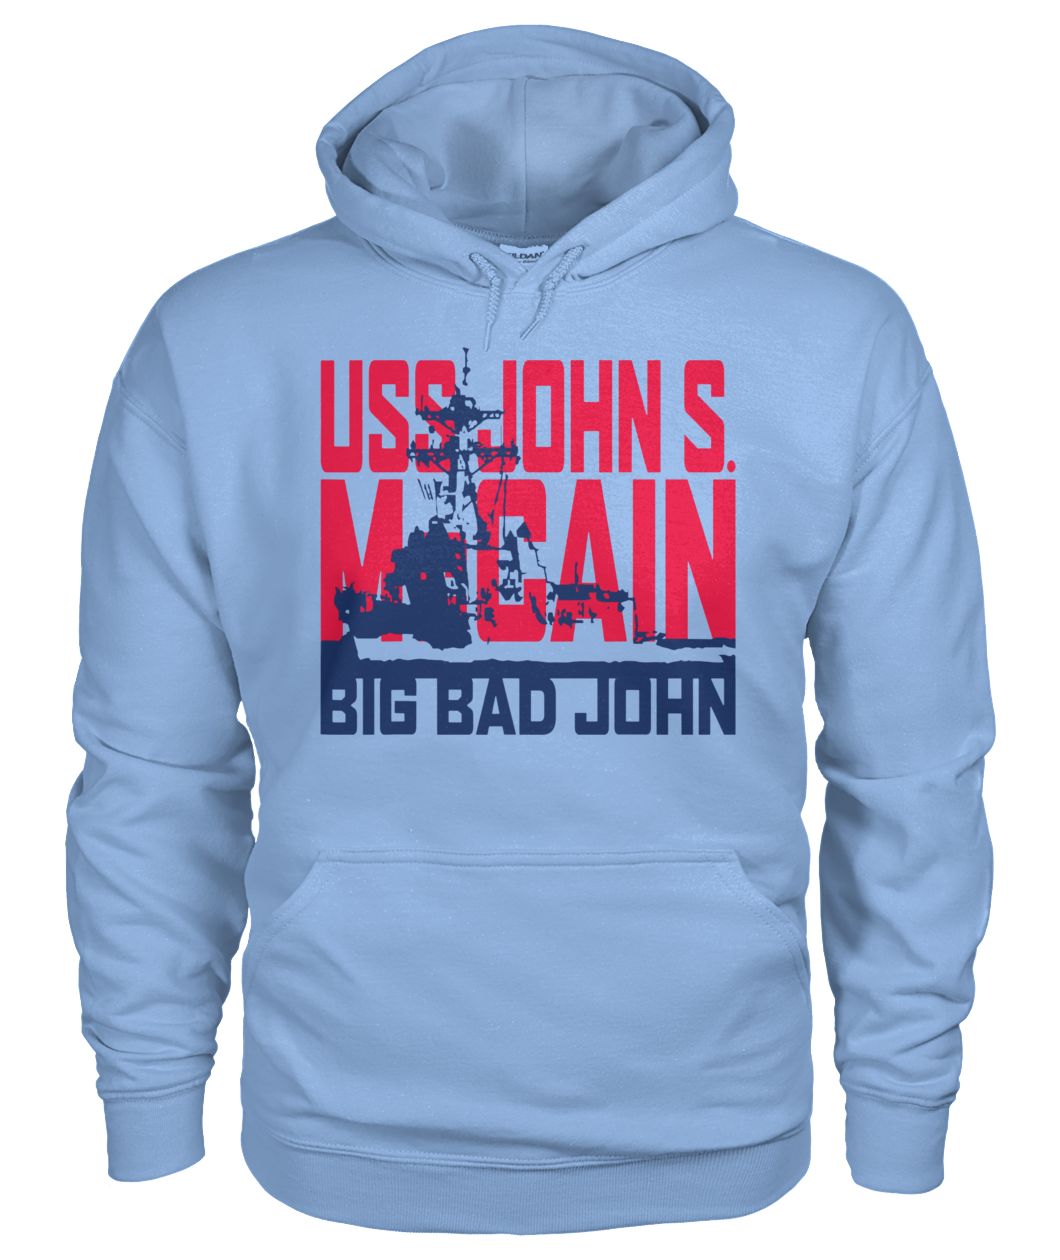 USS John S McCain big bad john support our vets gildan hoodie